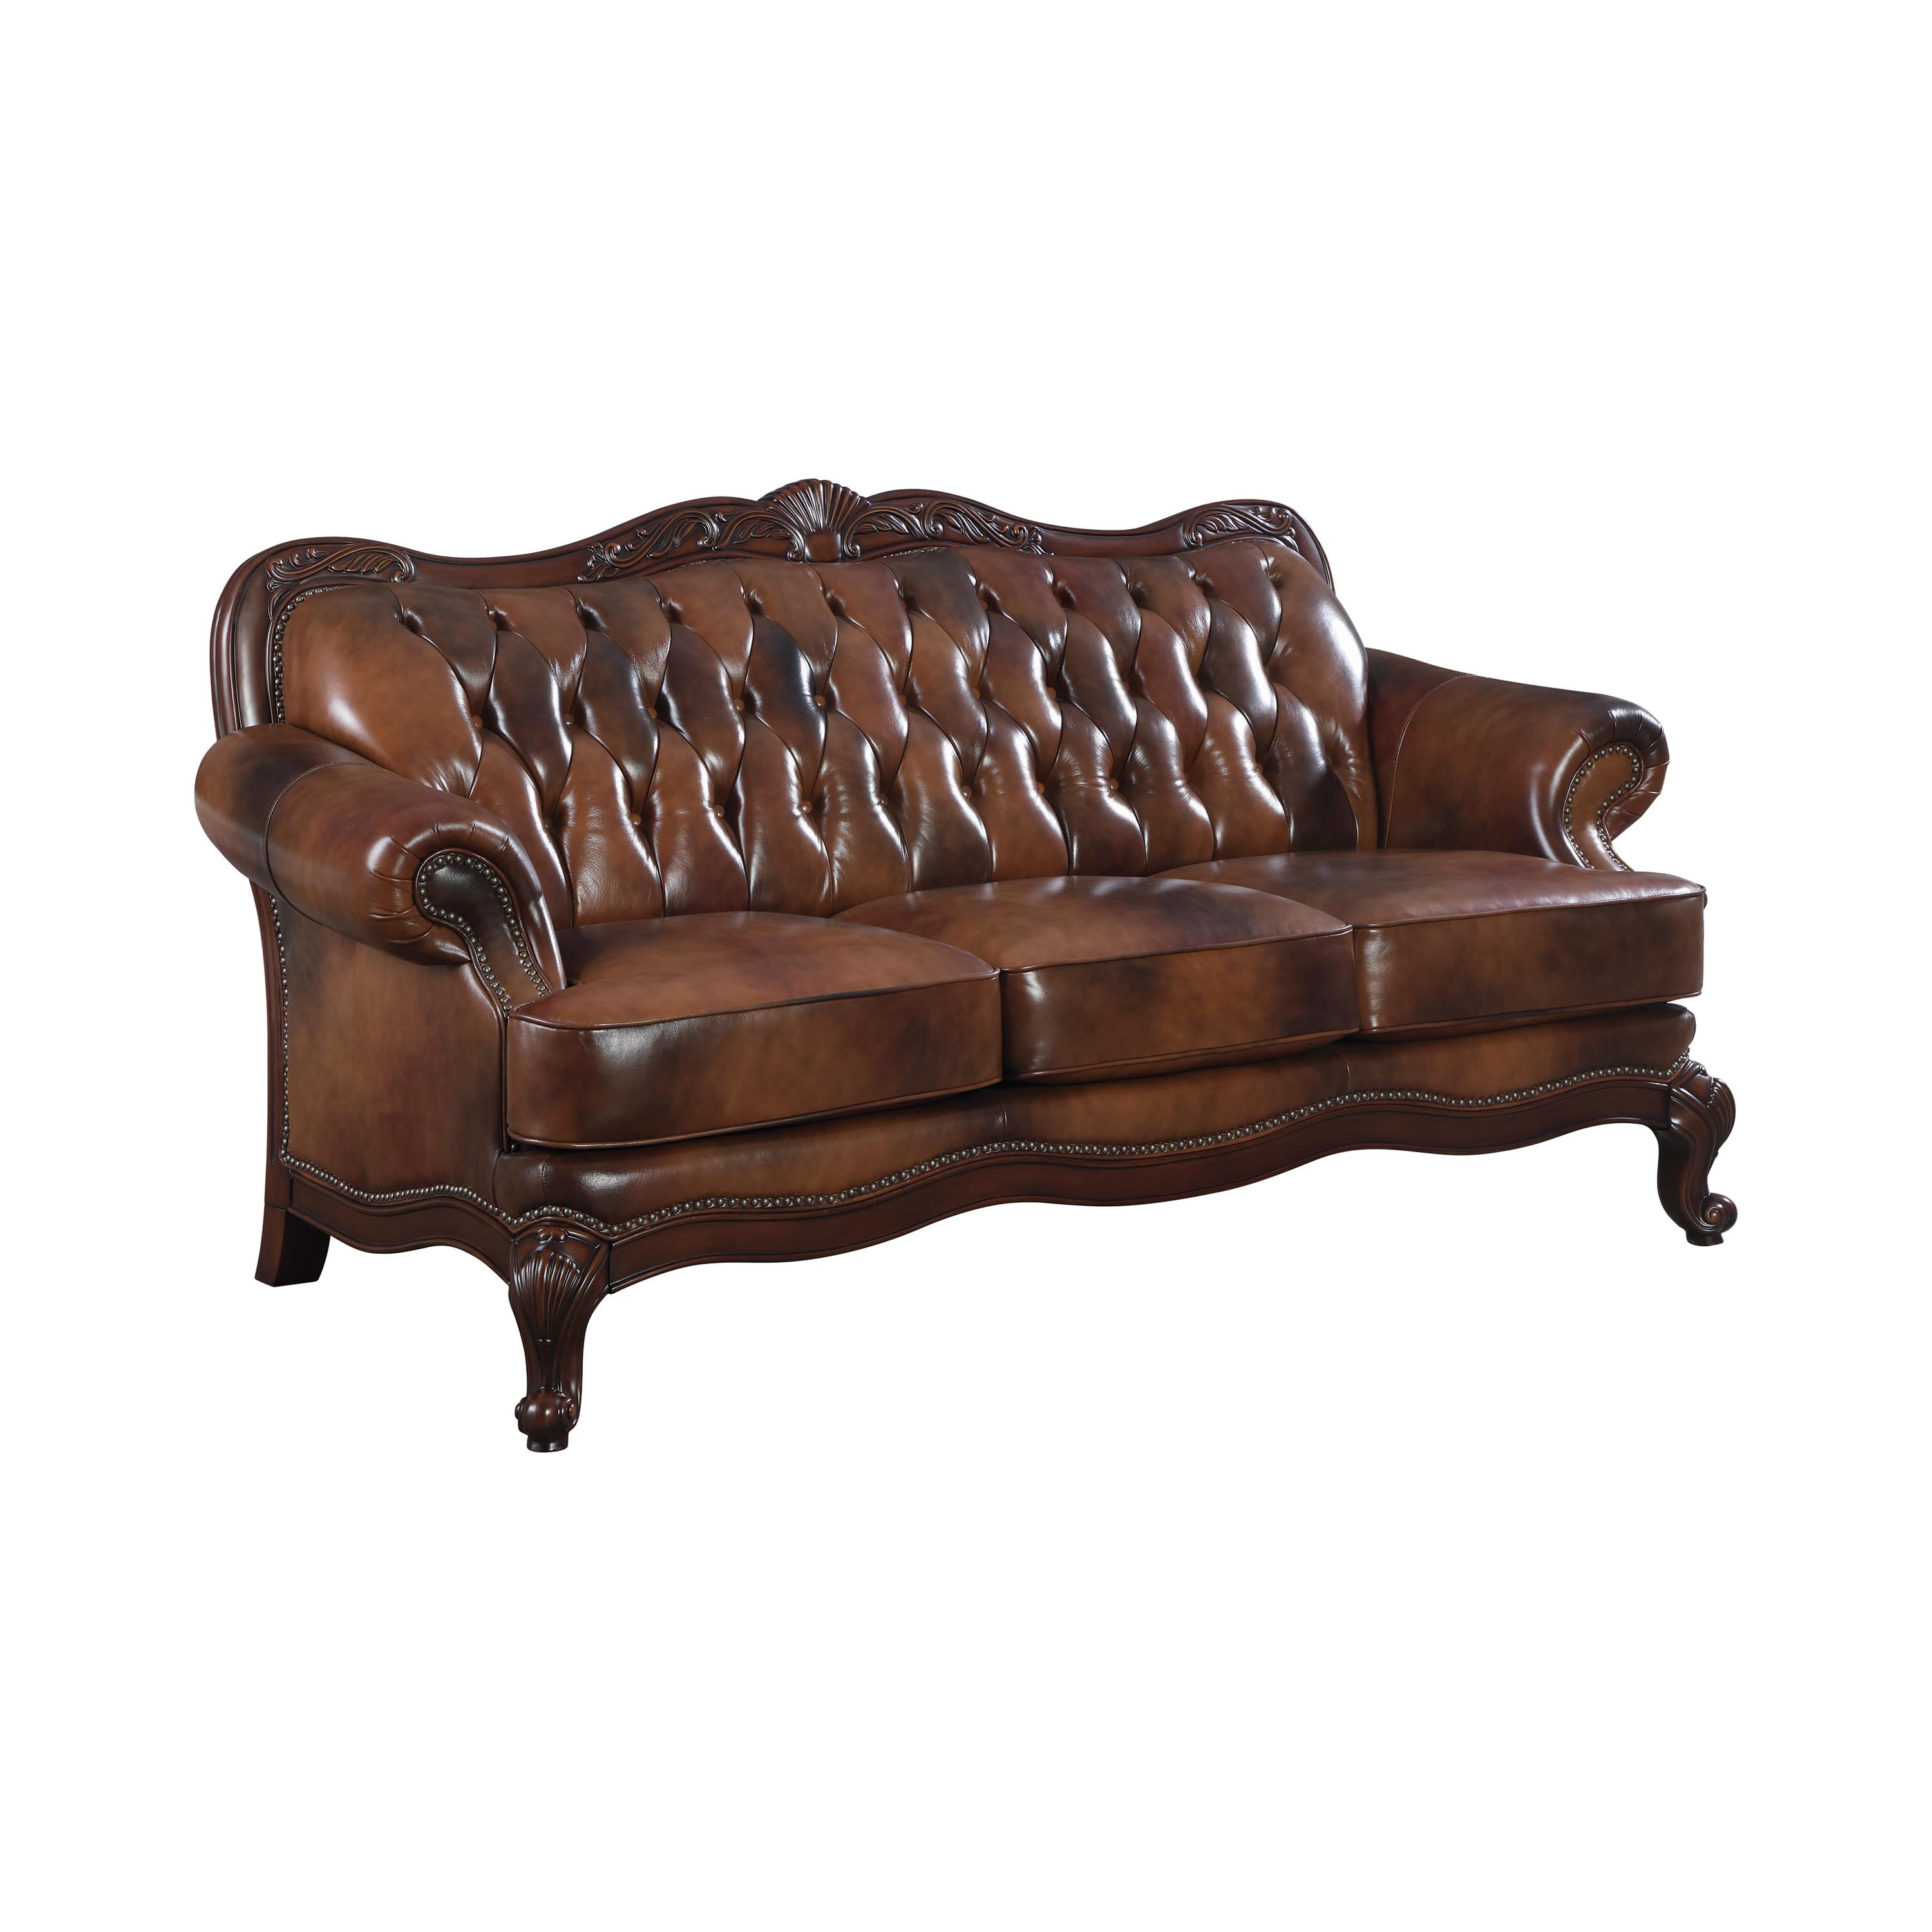 Classic Sofa 500681 Victoria 500681 in Brown Leather